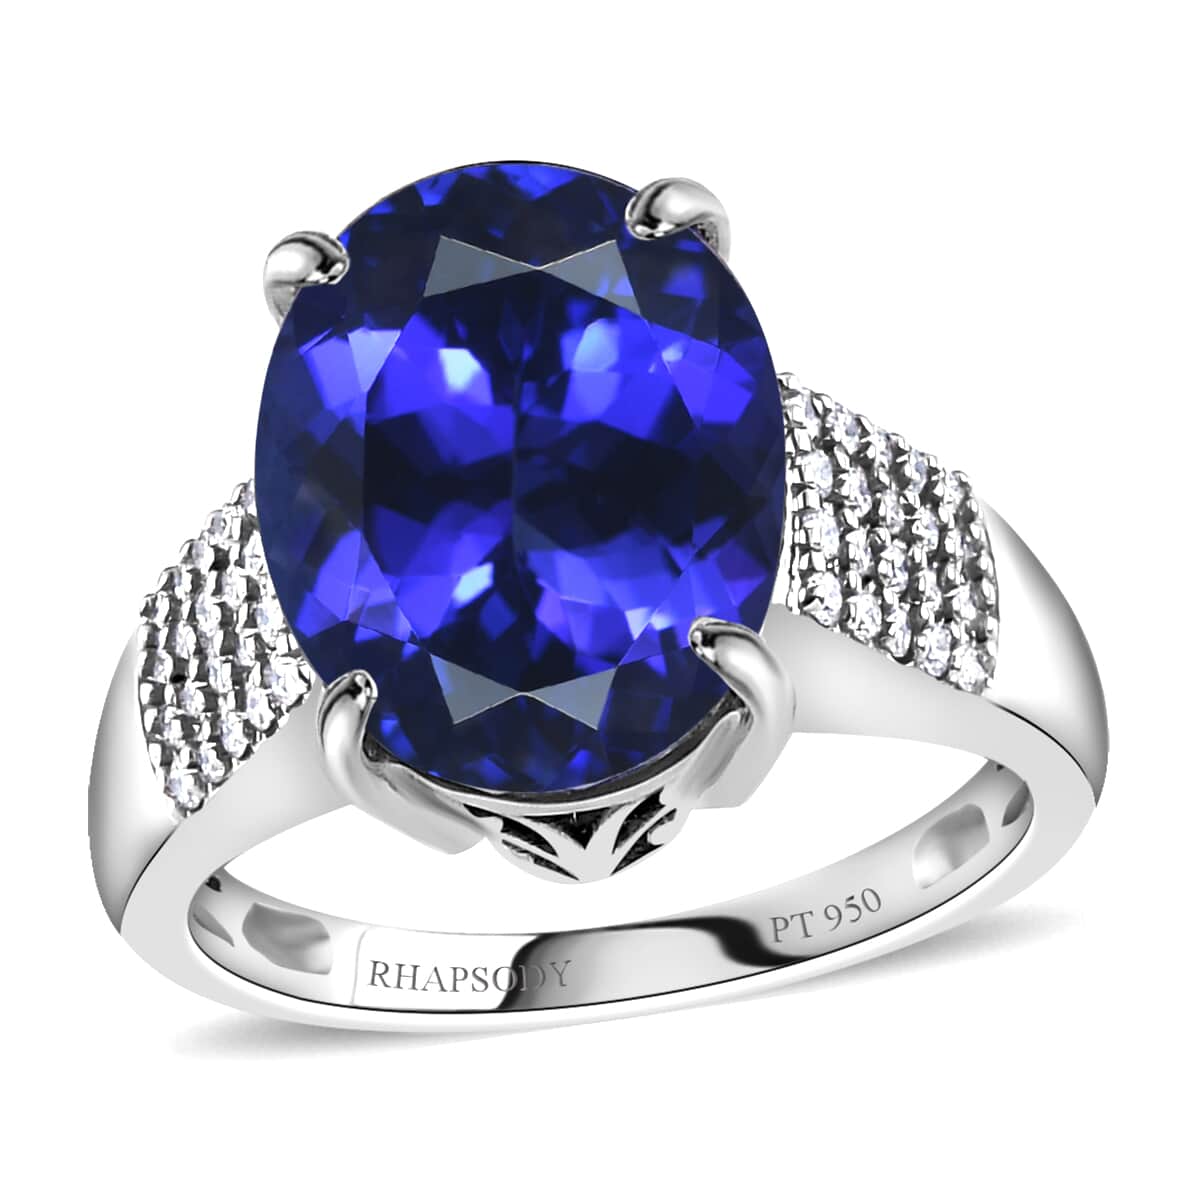 Rhapsody 950 Platinum AAAA Tanzanite and E-F VS Diamond Ring (Size 7.0) 8.90 Grams 9.35 ctw image number 0